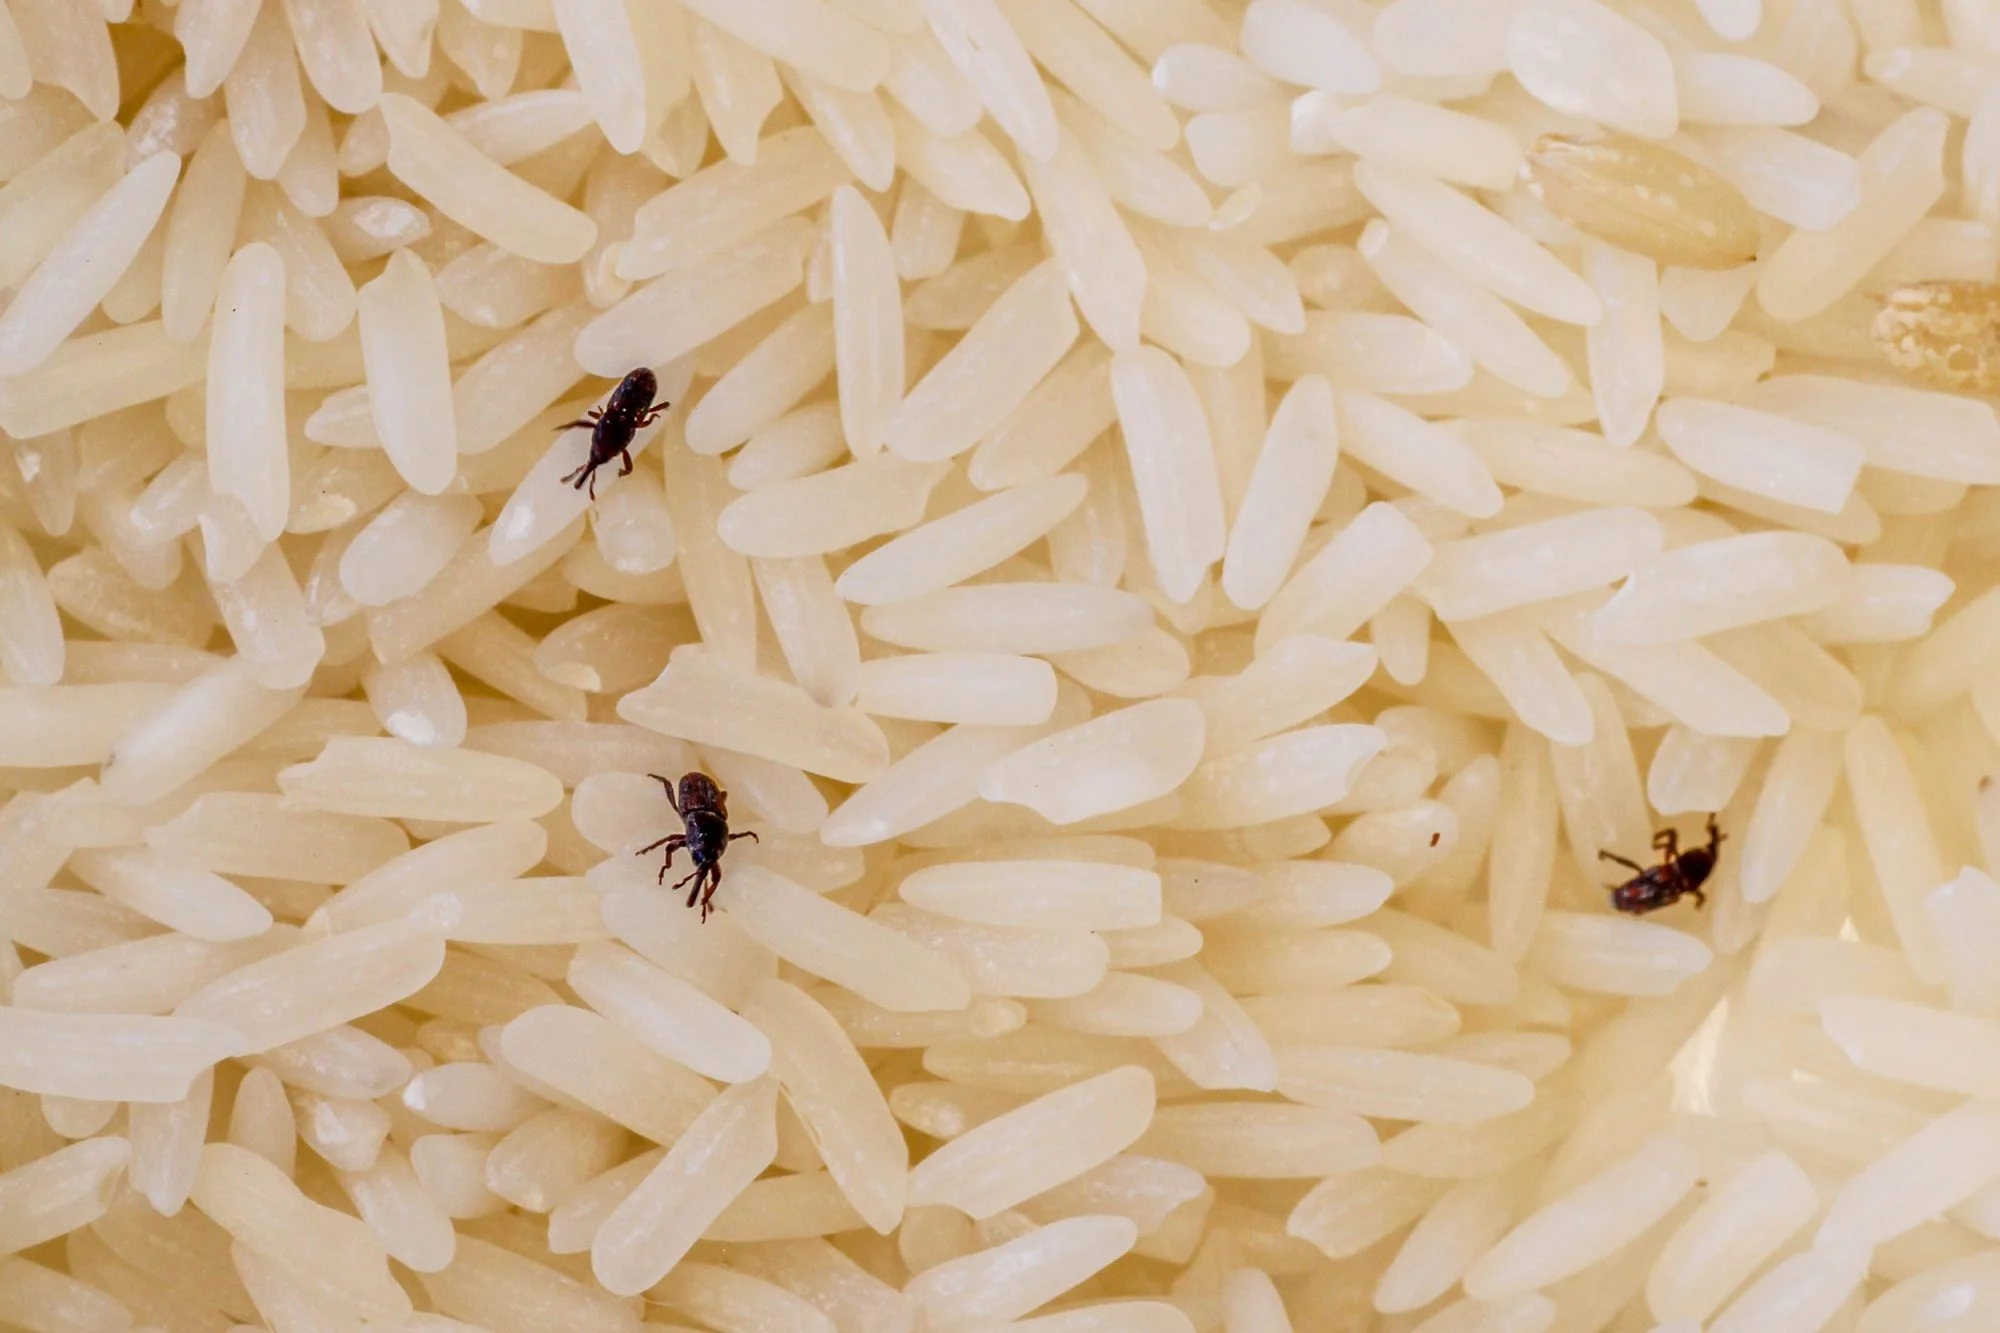 Cara menghilangkan kutu beras